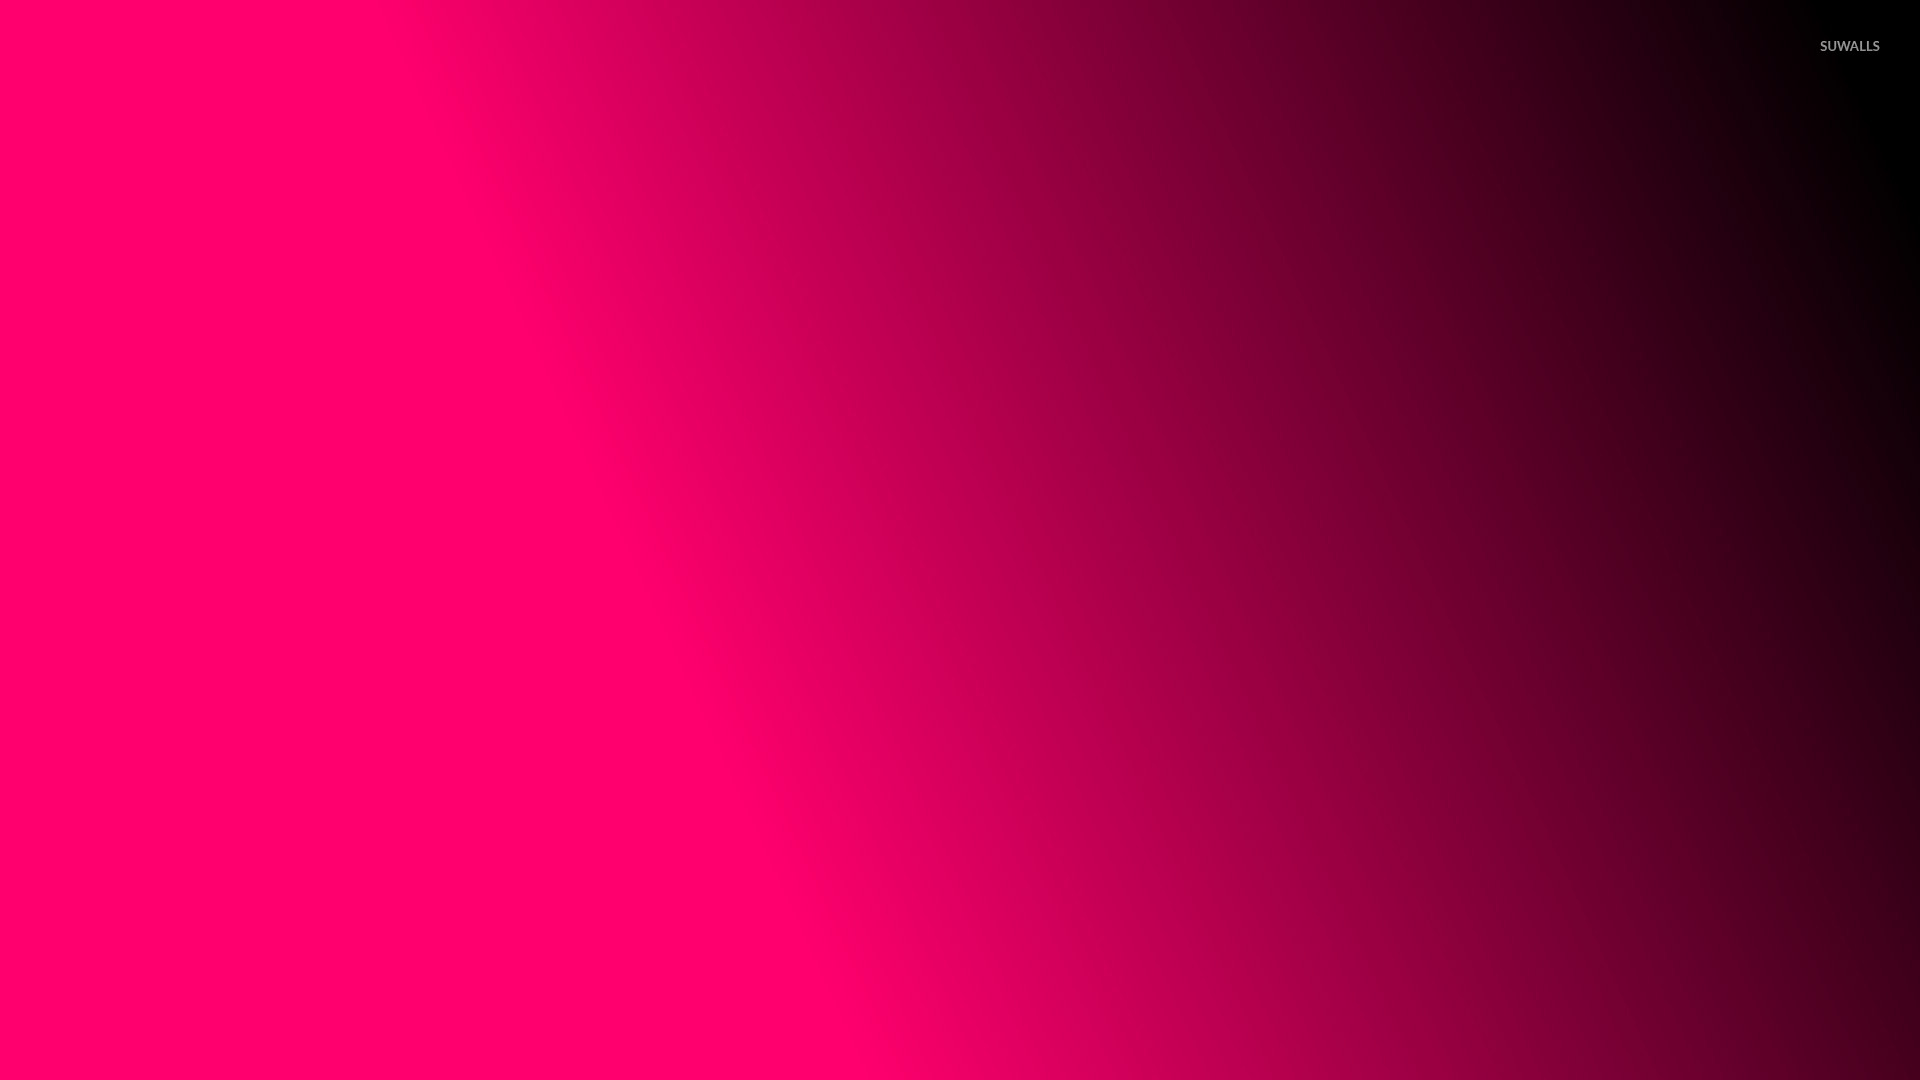 Pink gradient [2] wallpaper - Minimalistic wallpapers - #25217